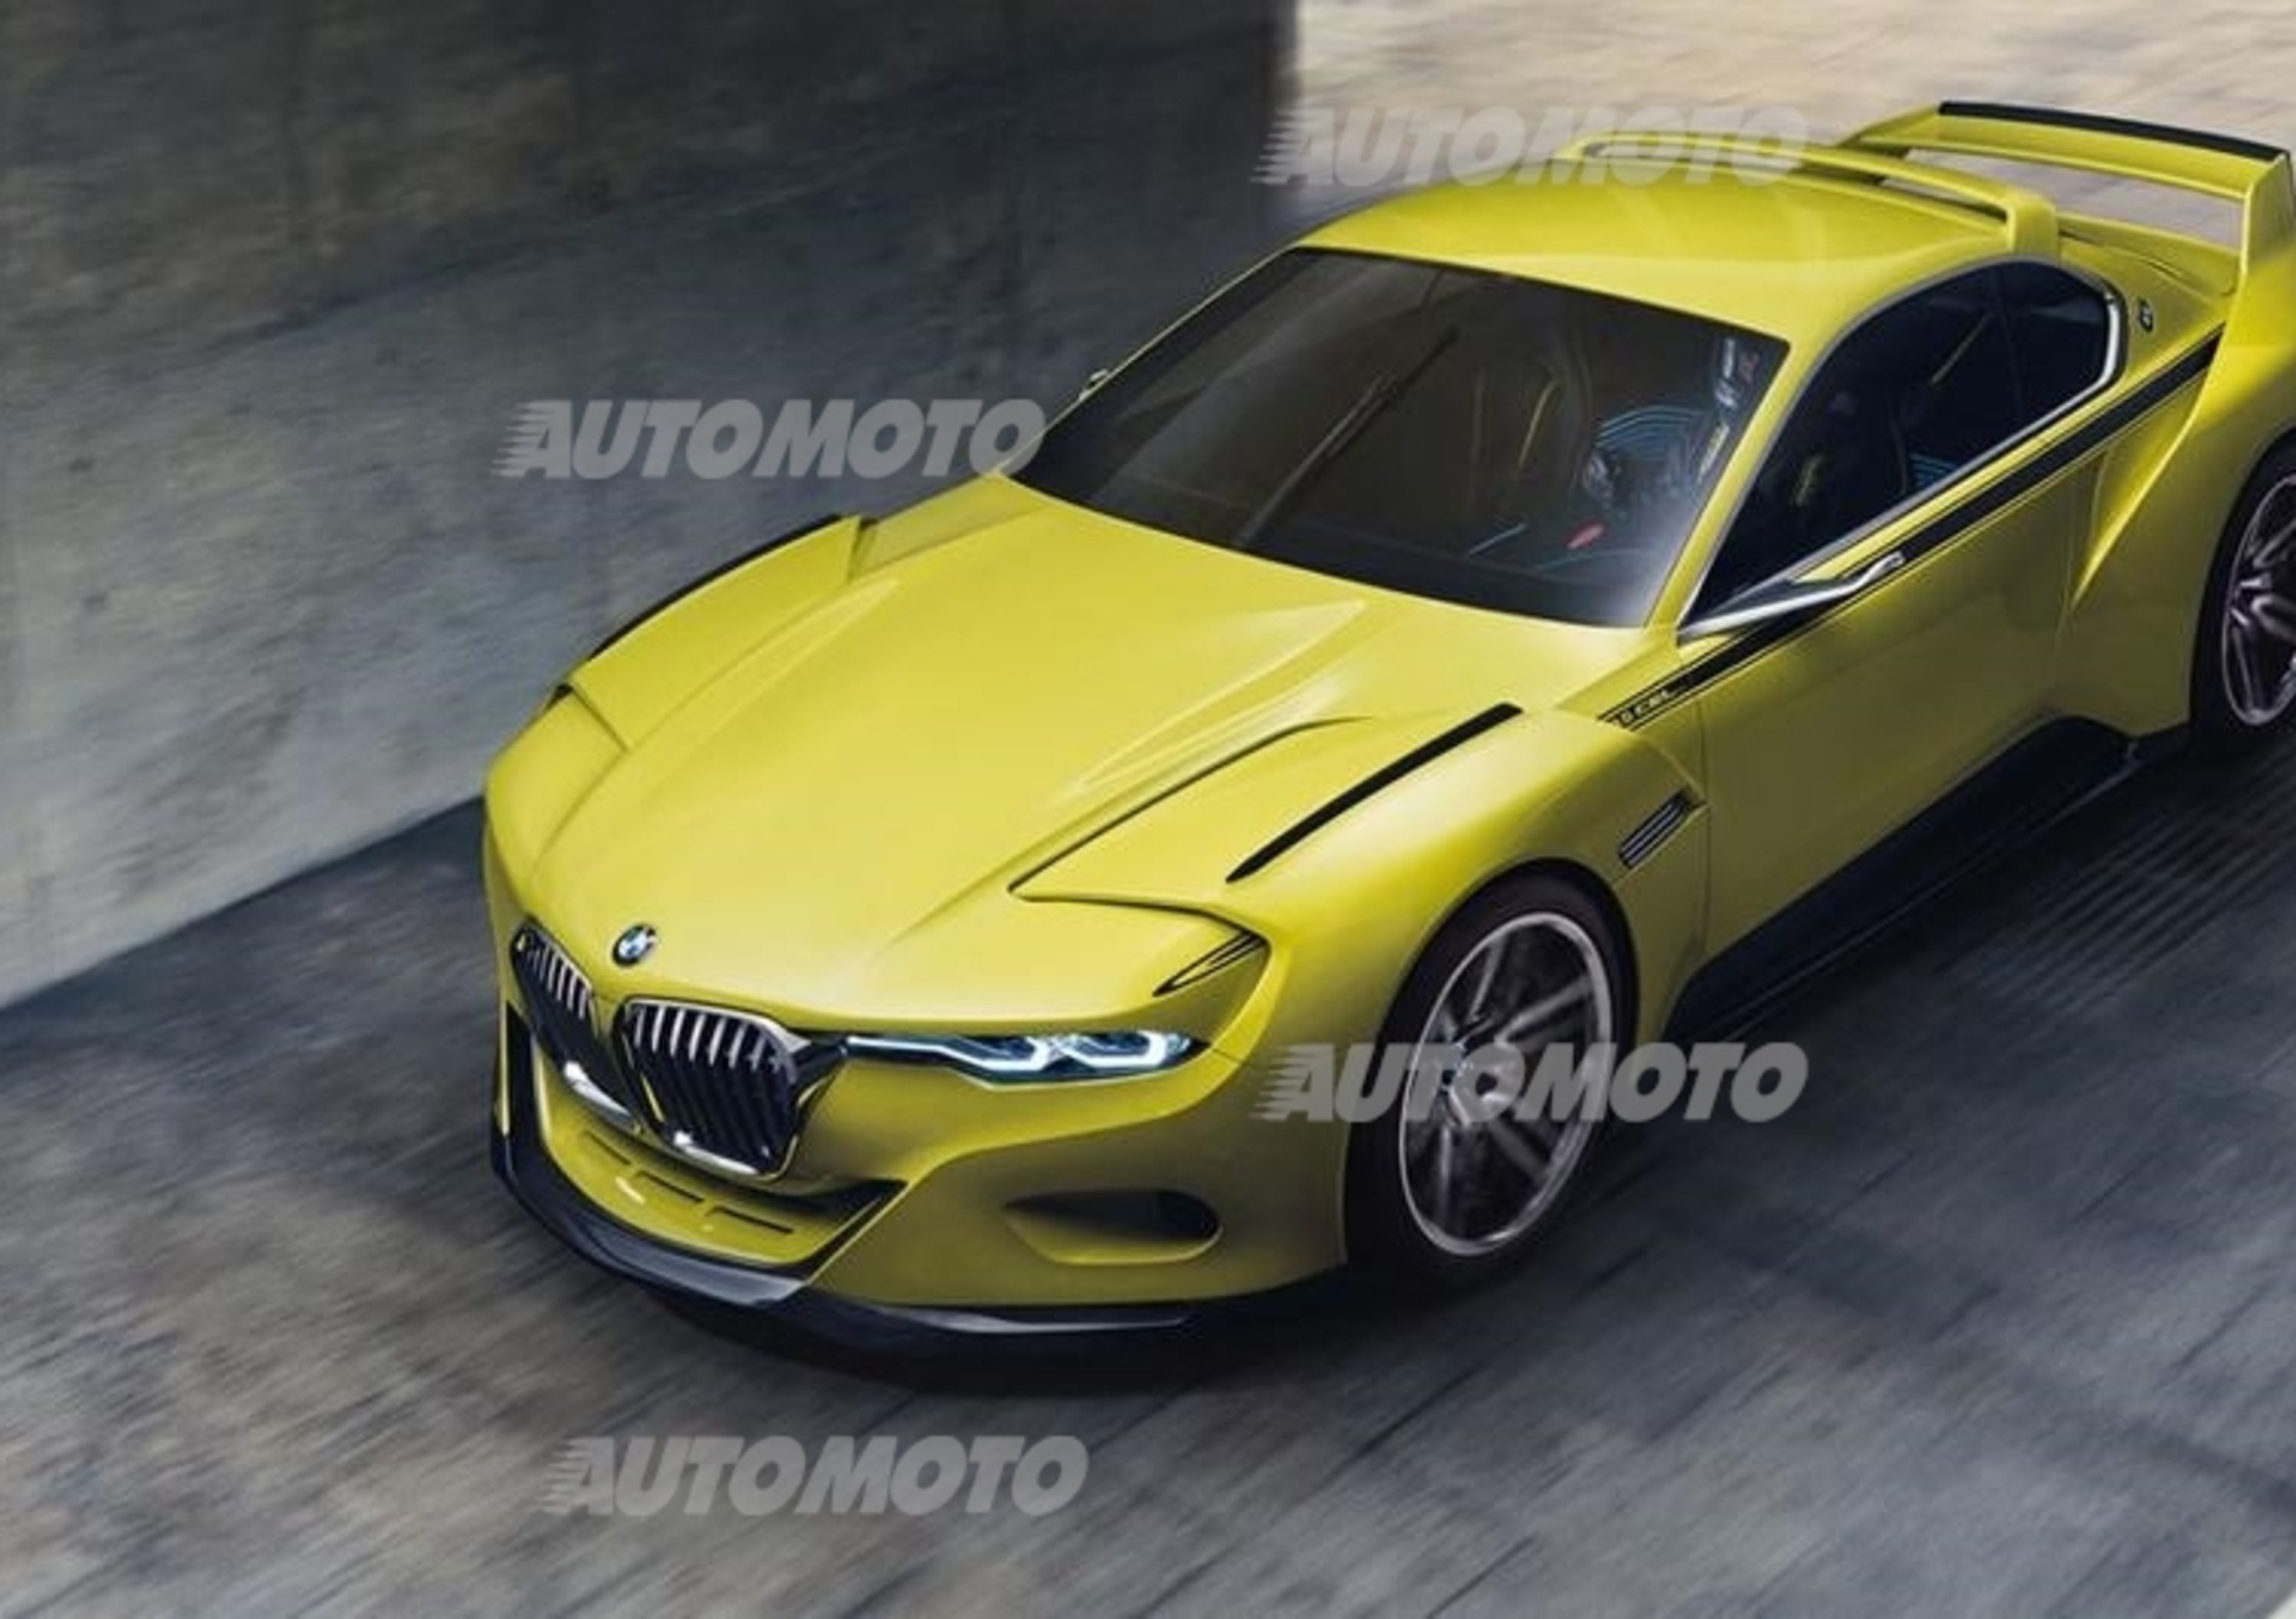 BMW 3.0 CSL Hommage: quando i prototipi fanno sognare